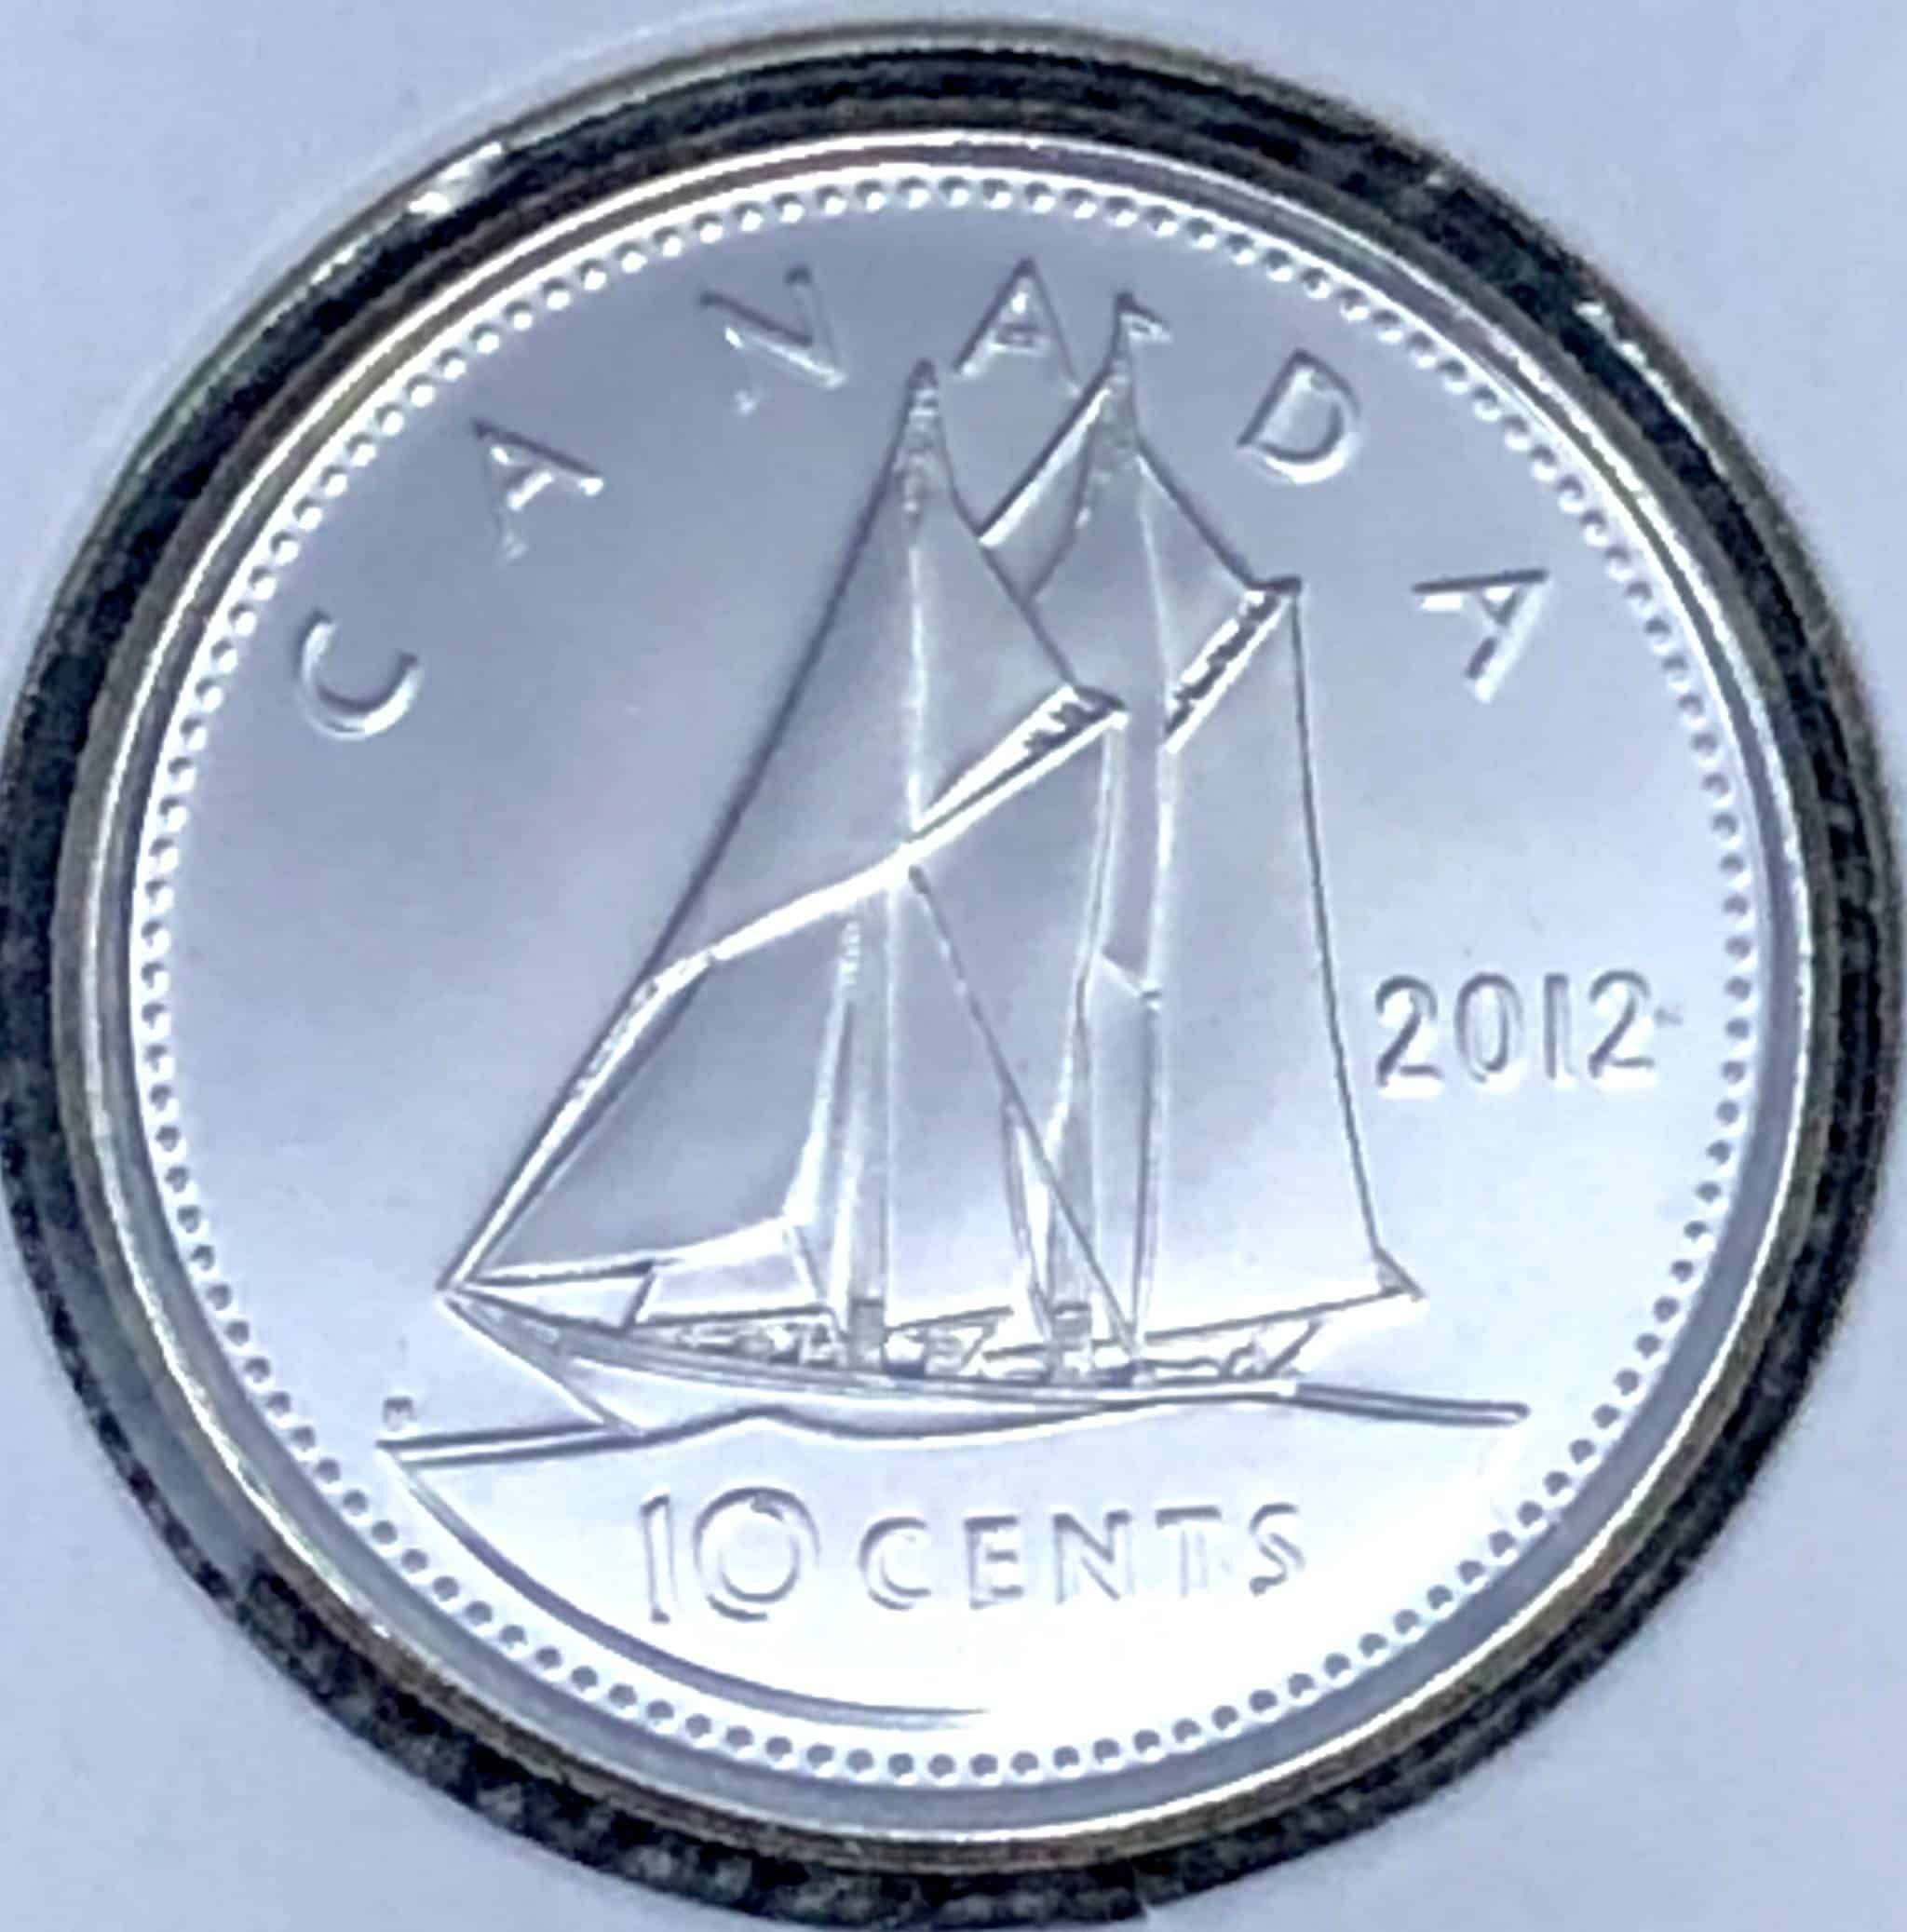 Canada - 10 cents 2012 - B.UNC